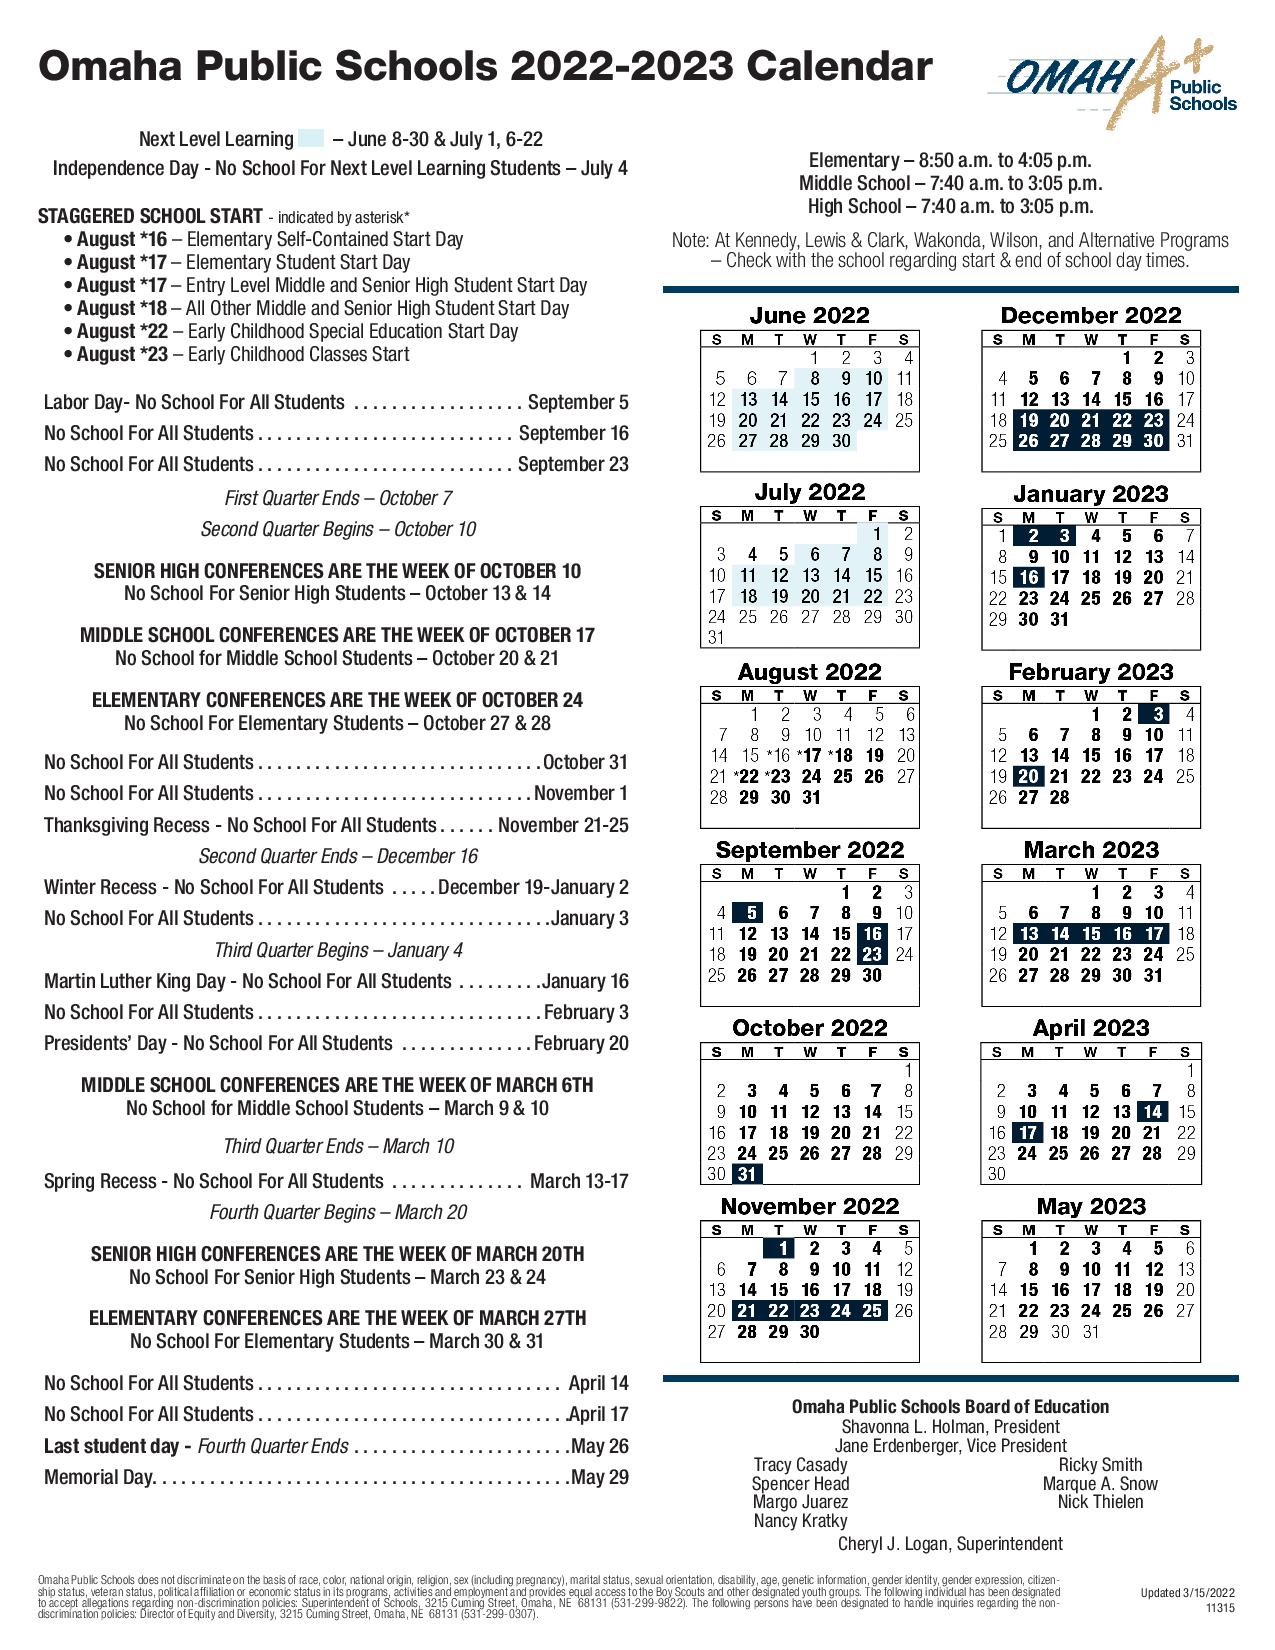 Omaha Public Schools Calendar Holidays 2022-2023 PDF